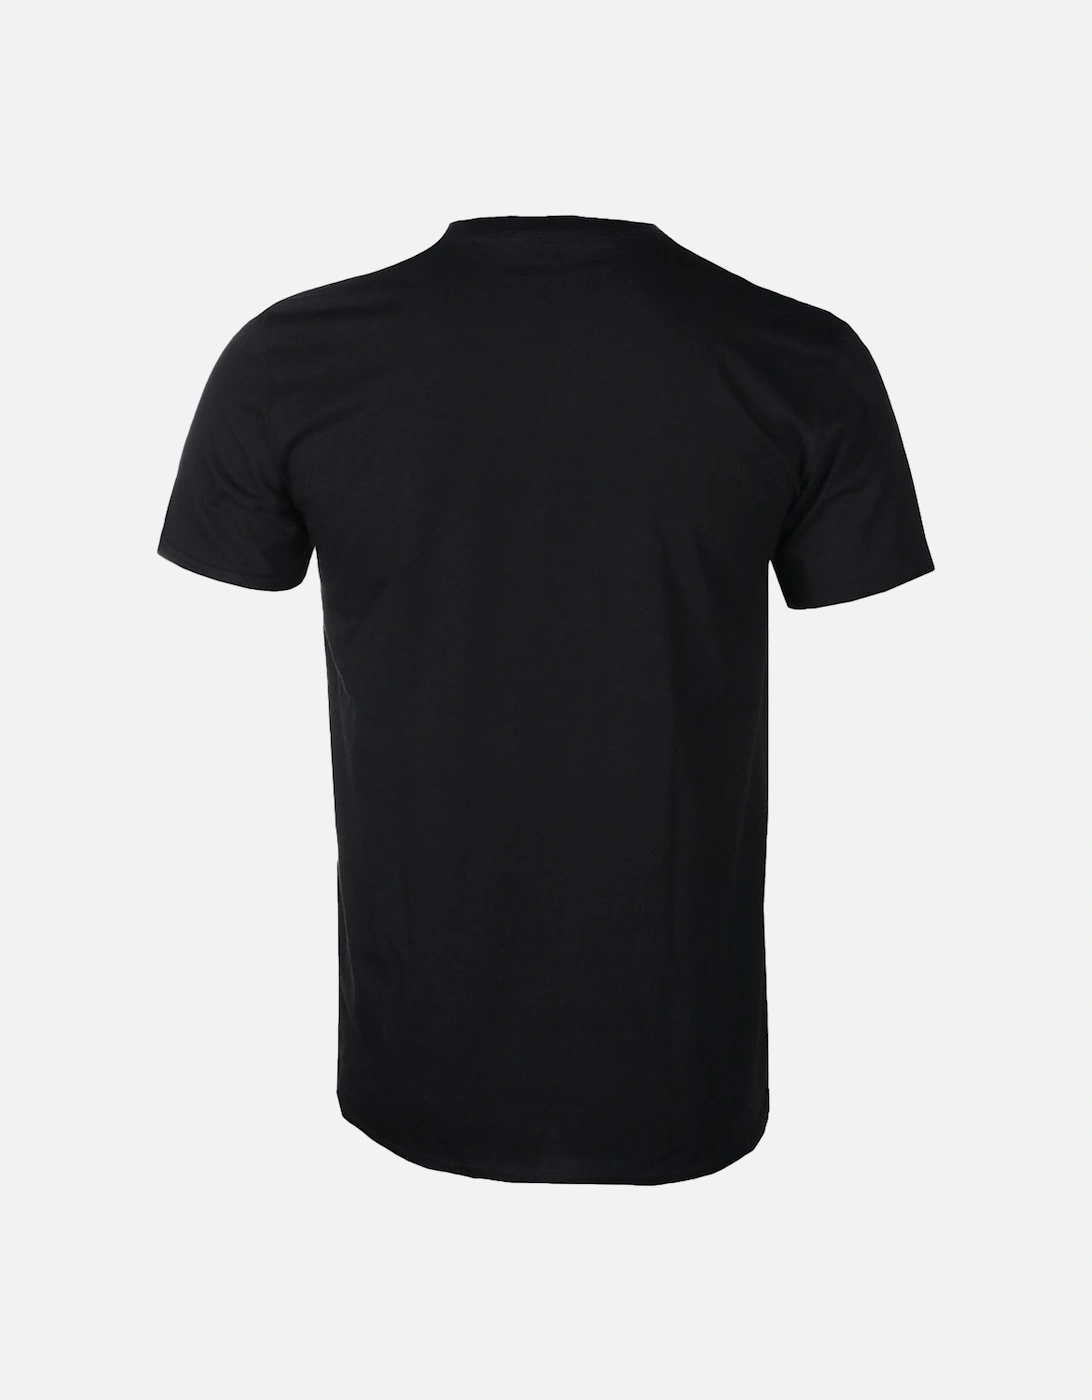 Unisex Adult Skullyton Cotton T-Shirt